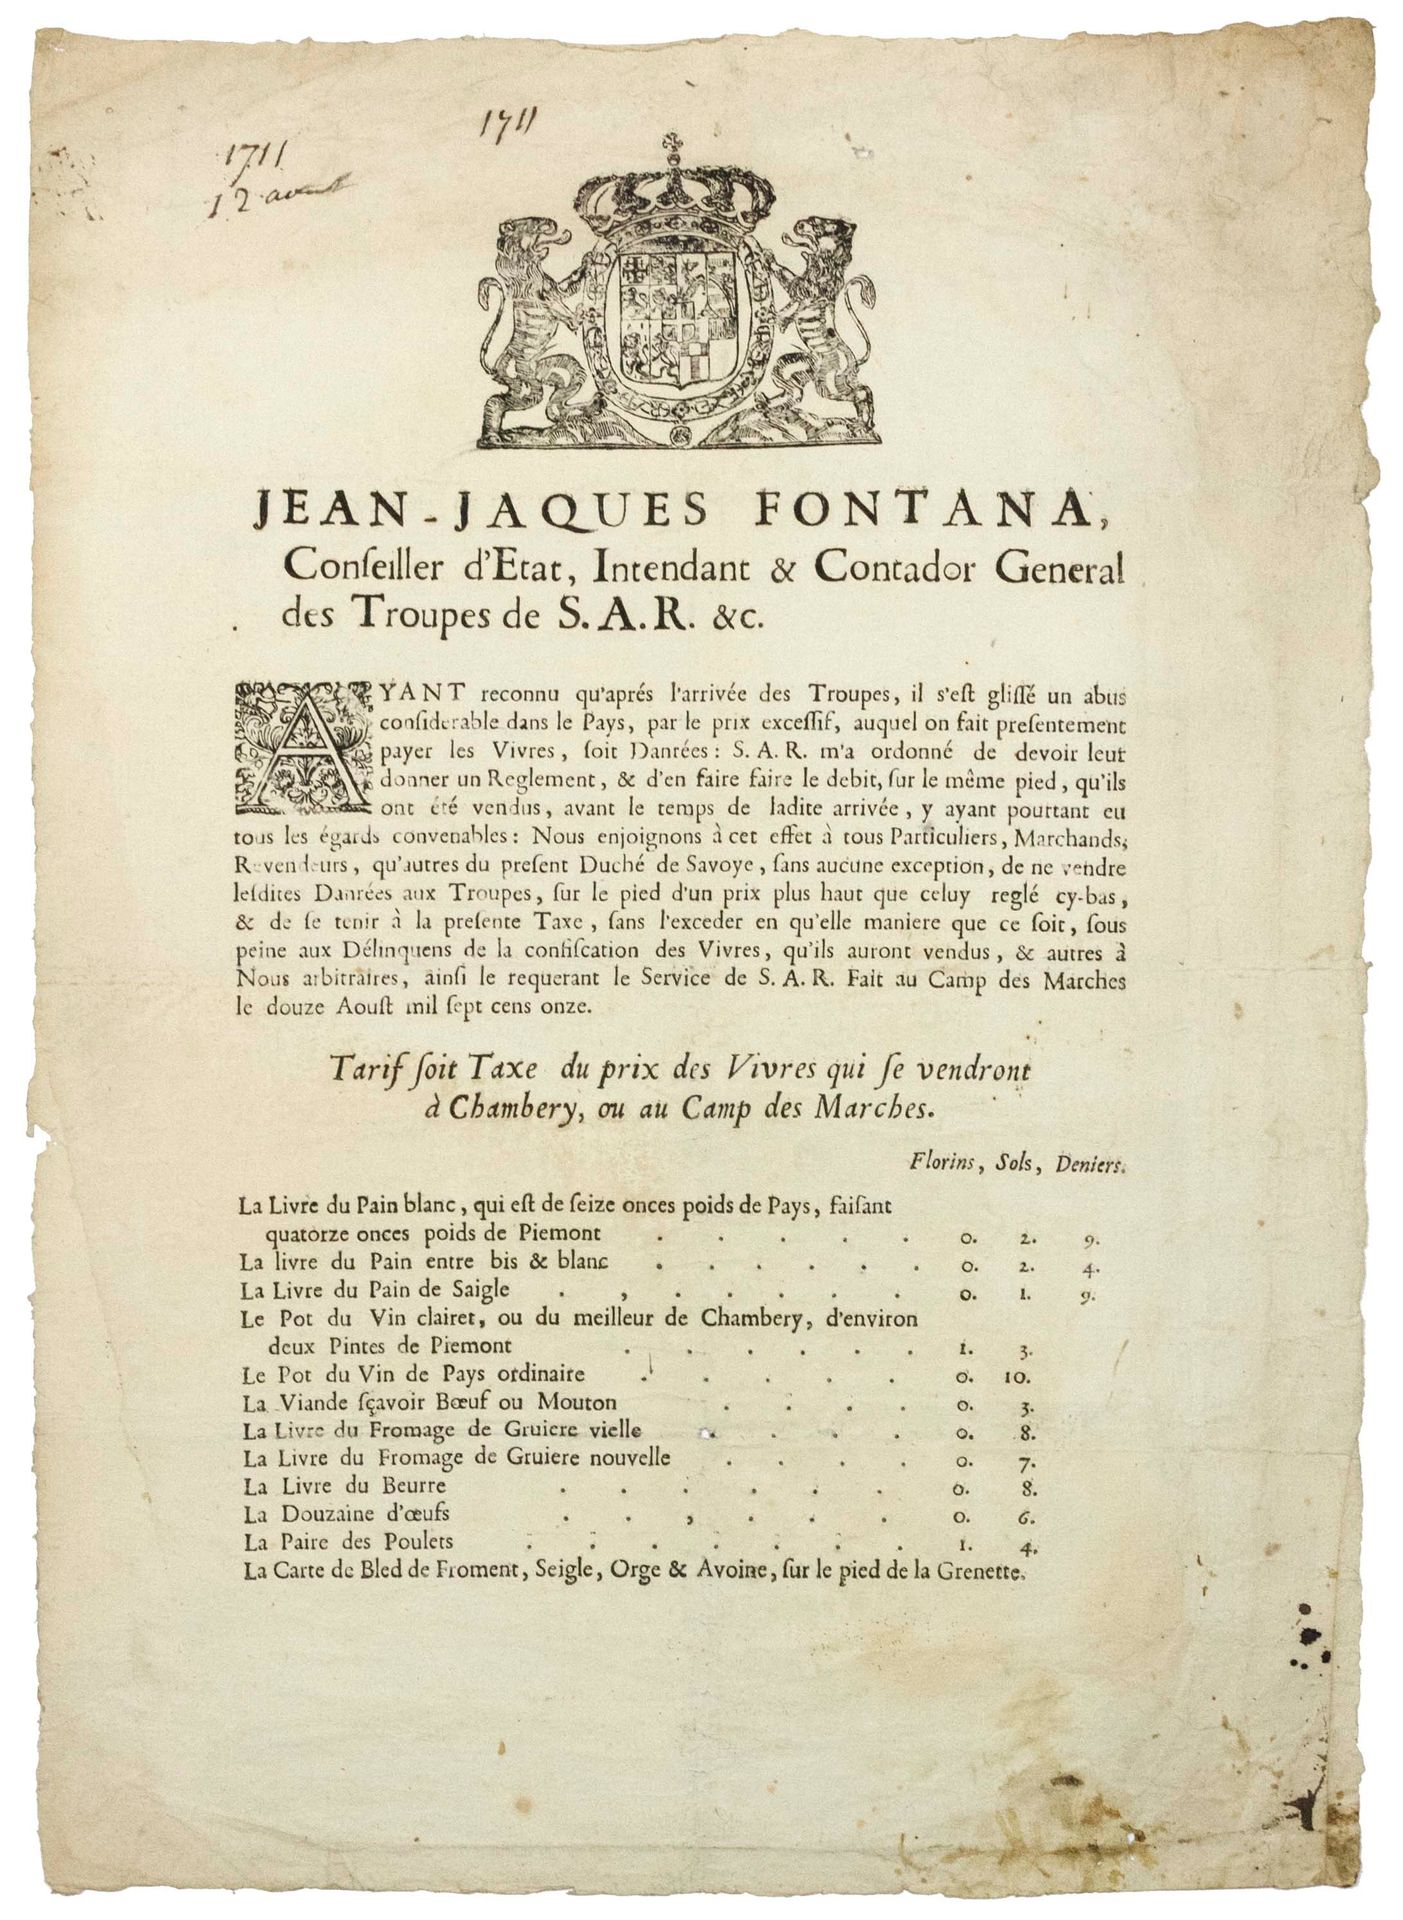 Null 尚贝里的食品关税 (73) 1711。让-雅克-丰塔纳（Jean Jacques FONTANA）国务委员、王室殿下部队指挥官和总指挥的命令"。 (H&hellip;